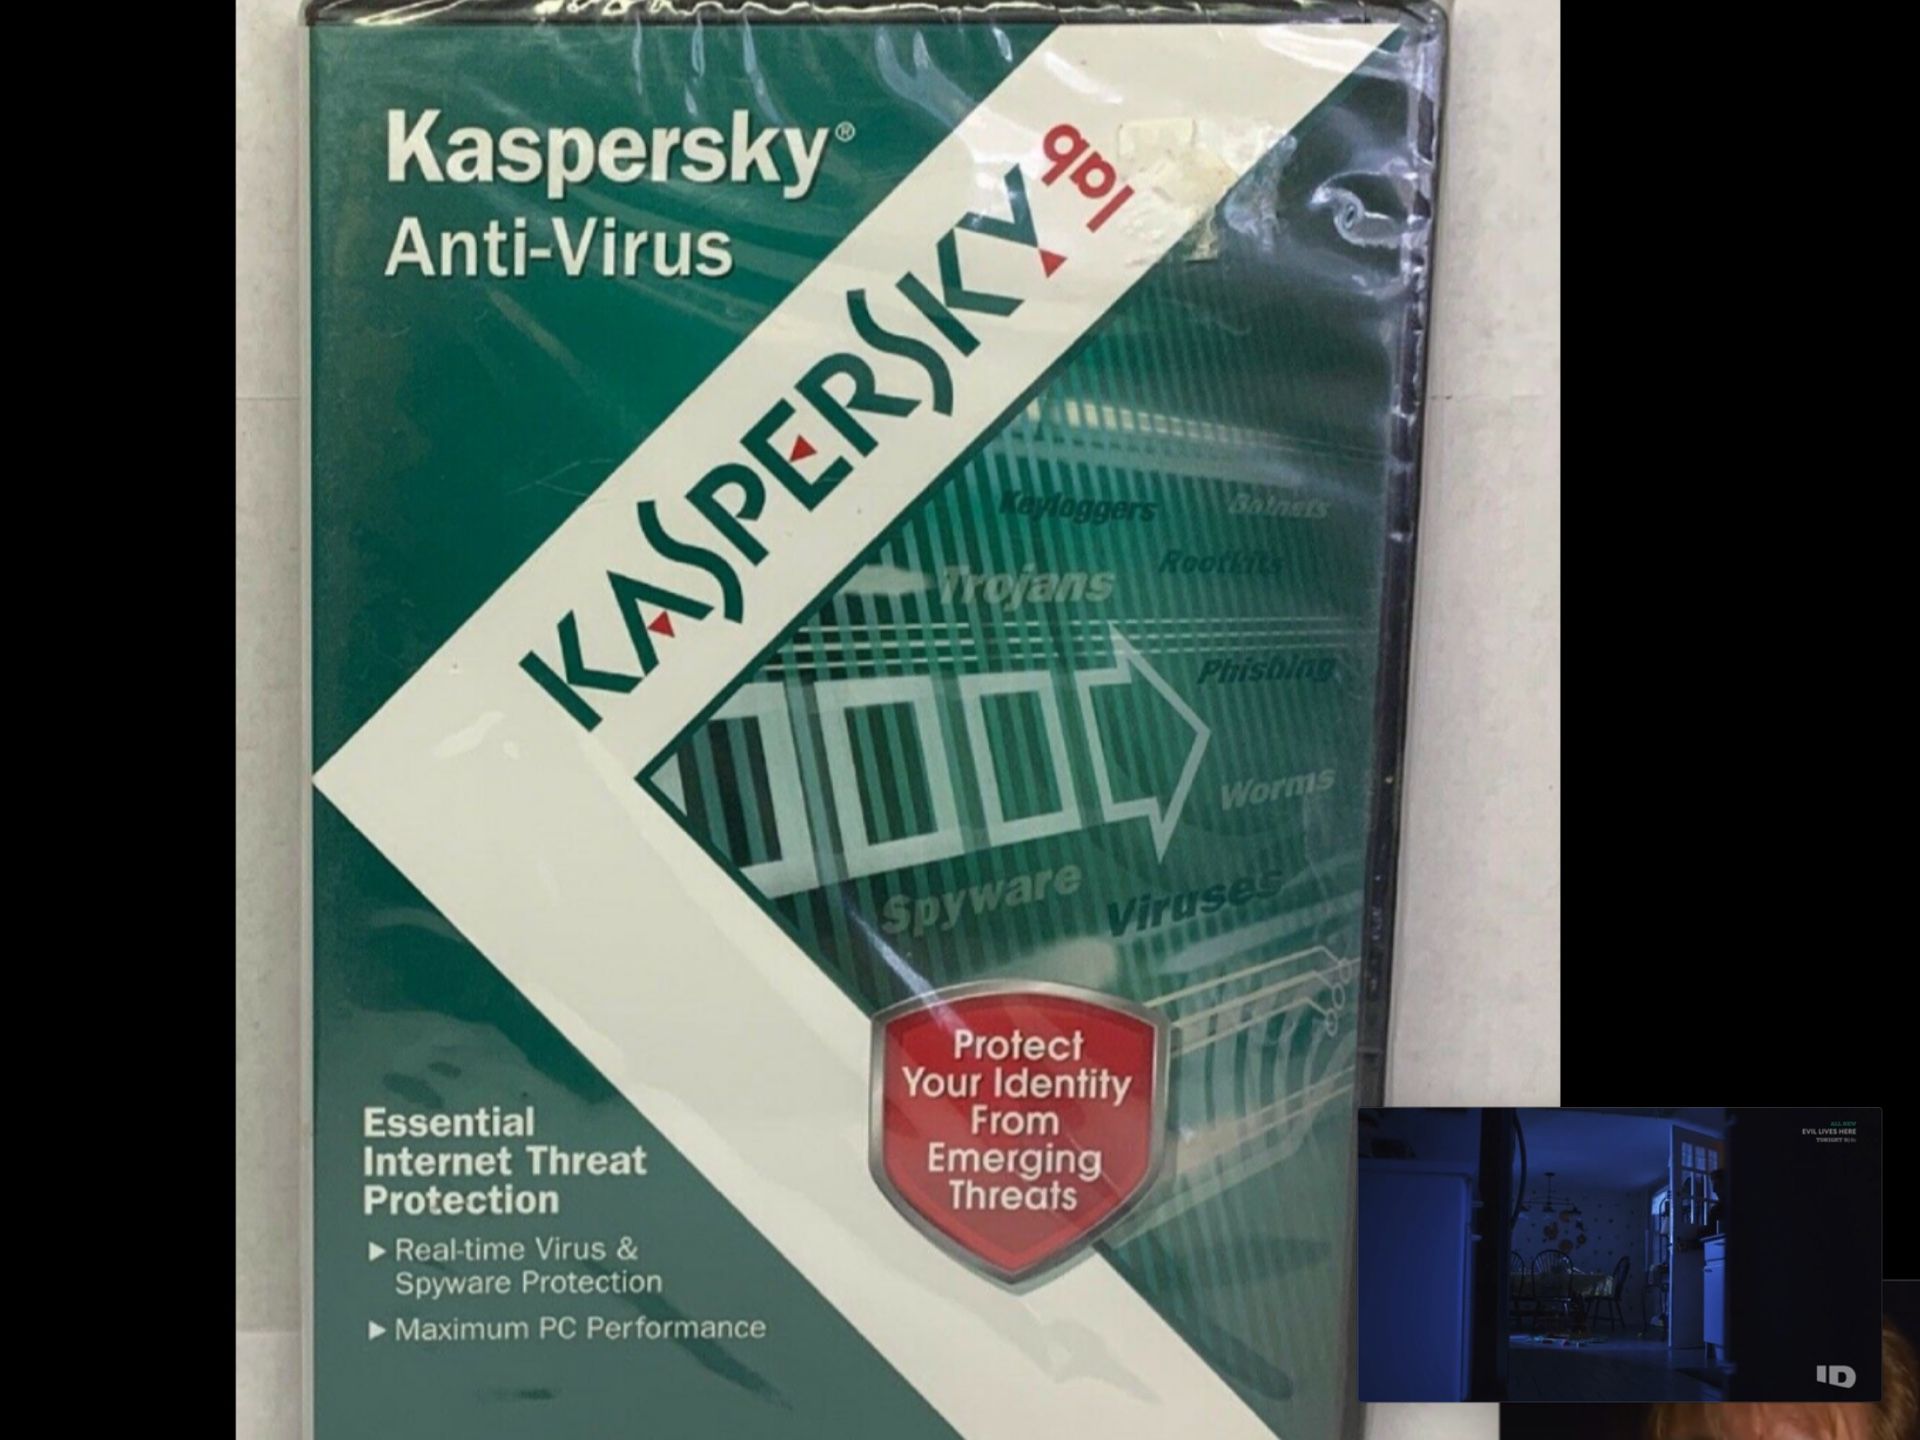 antivirus box cd key included kasperky for 3 computers